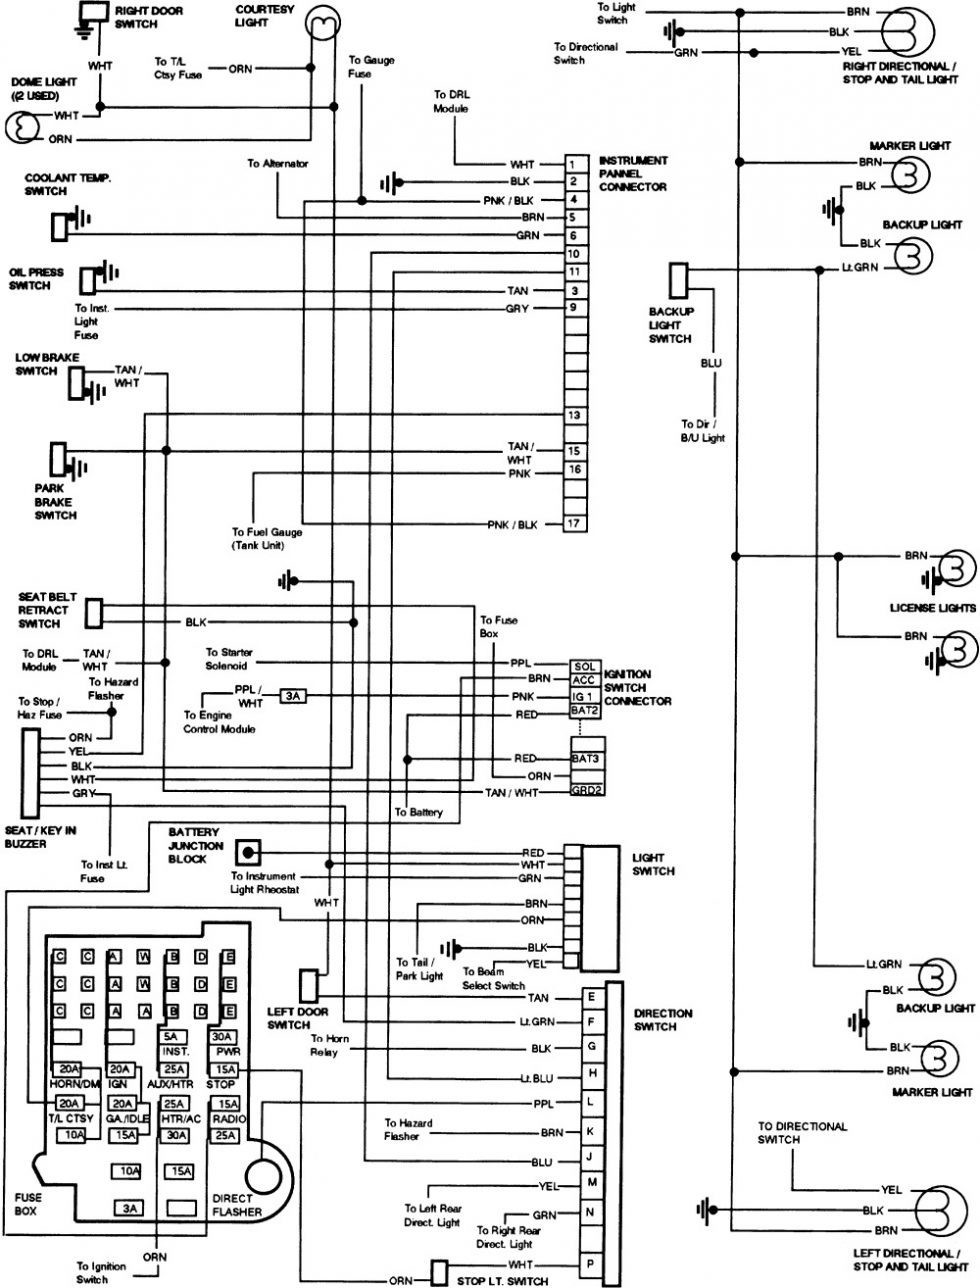 1983 chevy truck headlight wiring wiring diagram u2022 rh msblog co 1988 GMC Truck Wiring Diagram